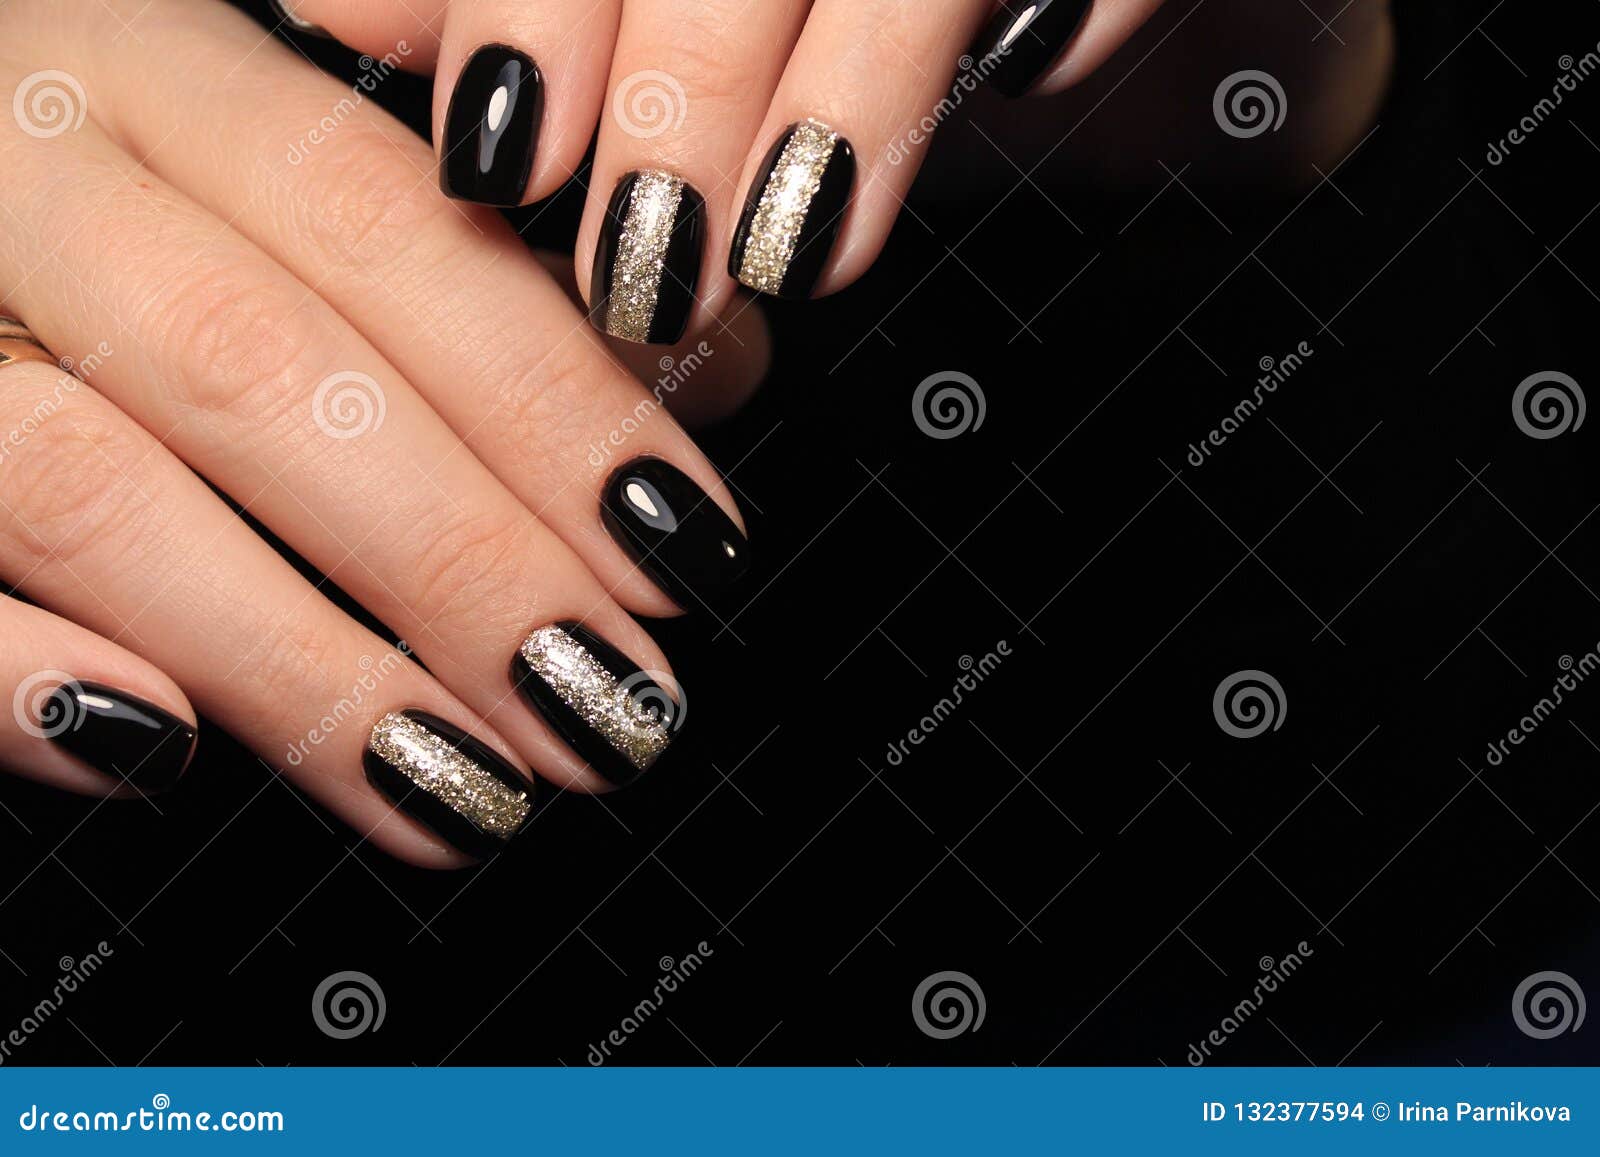 Long black nails stock photo. Image of dark, beautiful - 132377594